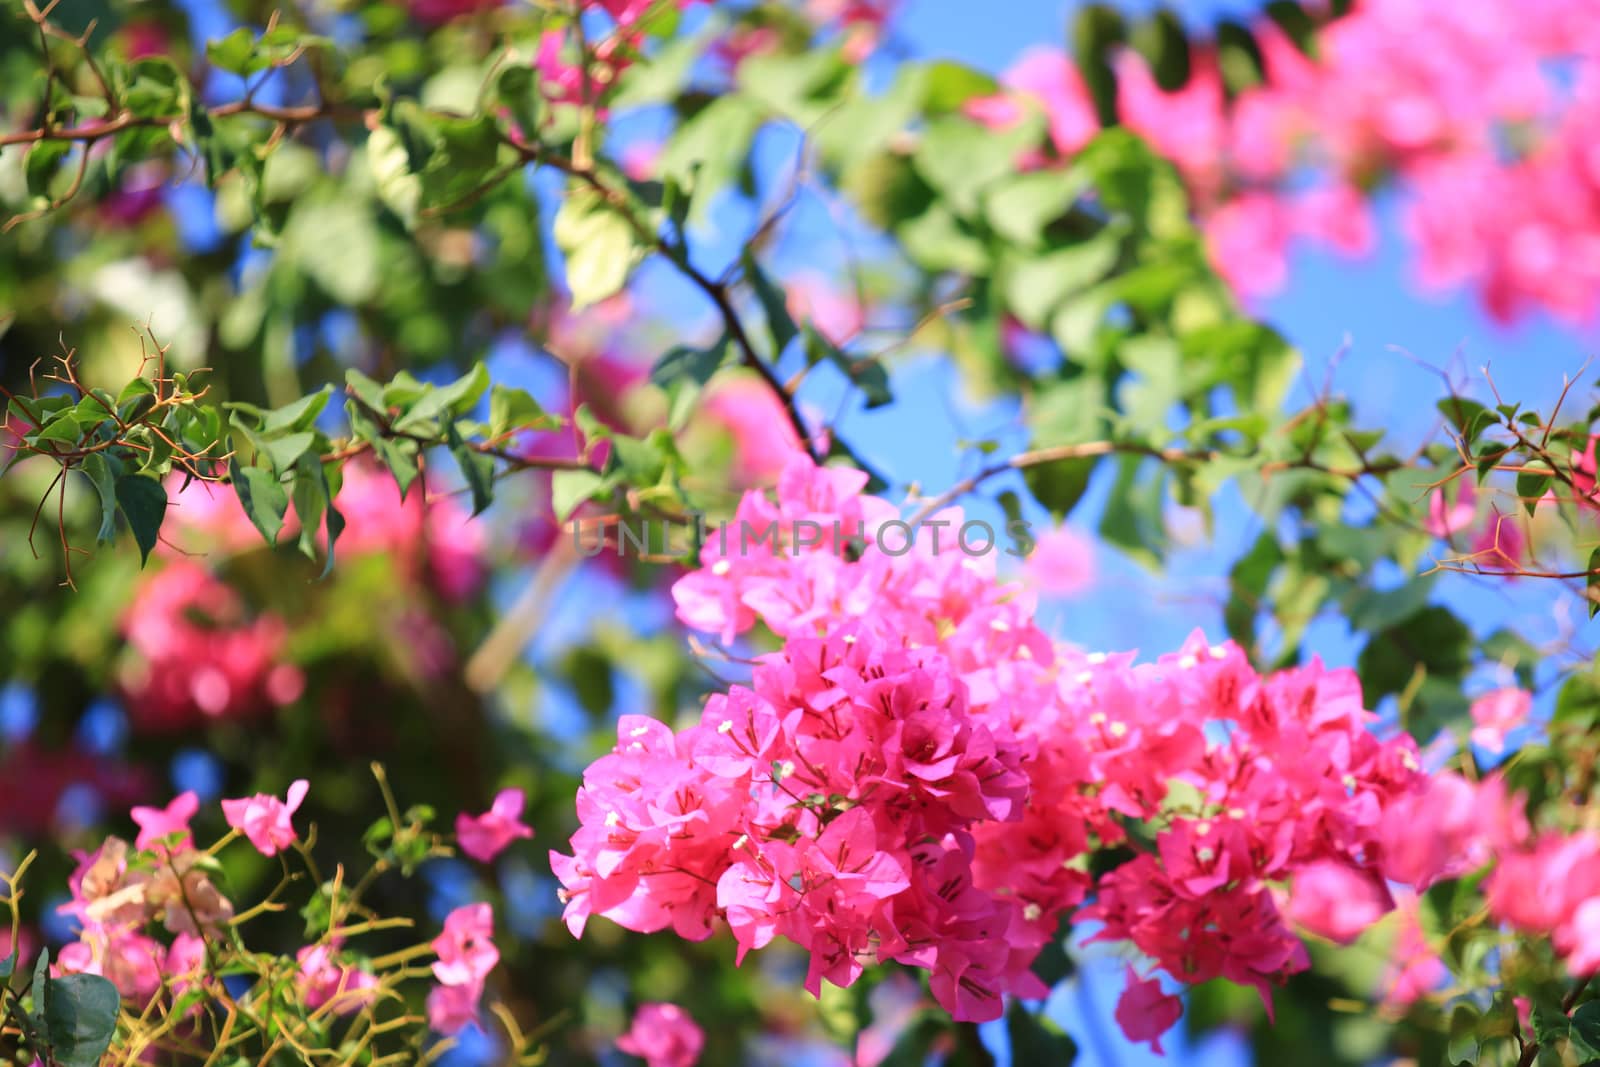 Beautiful pink red bougainvillea blooming, Bright pink red bougainvillea flowers as a floral background,Bougainvillea flowers texture and background,Close-up Bougainvillea tree with flowers